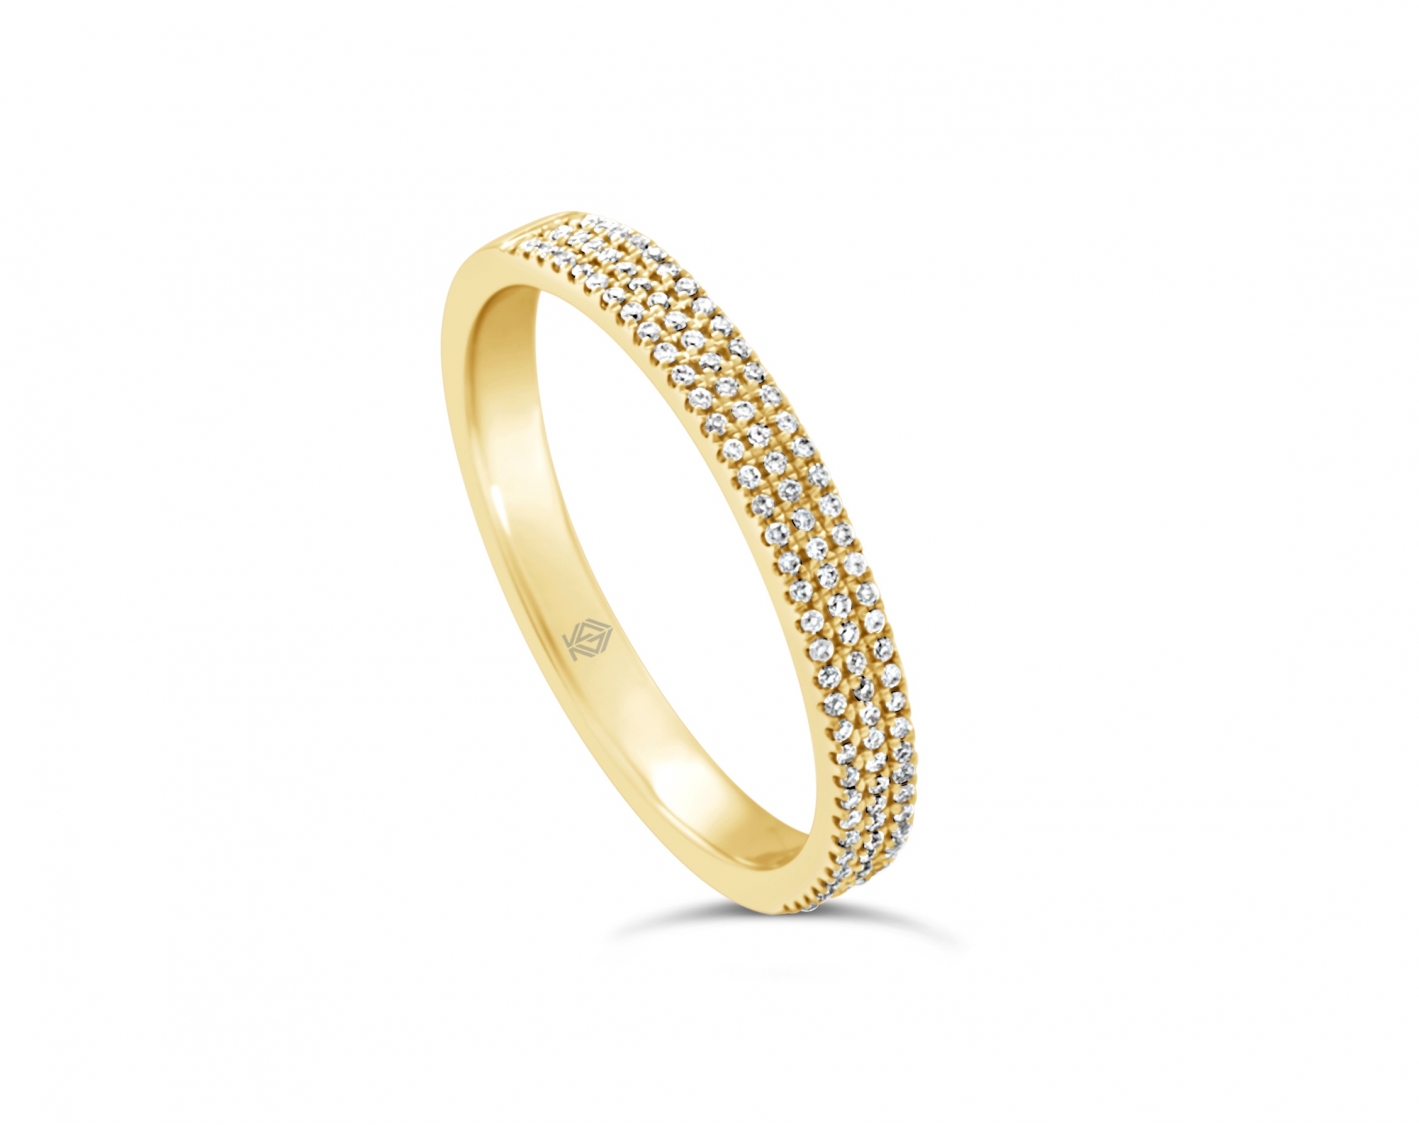 18k yellow gold 3-row half eternity pave set round shaped diamond wedding ring Photos & images